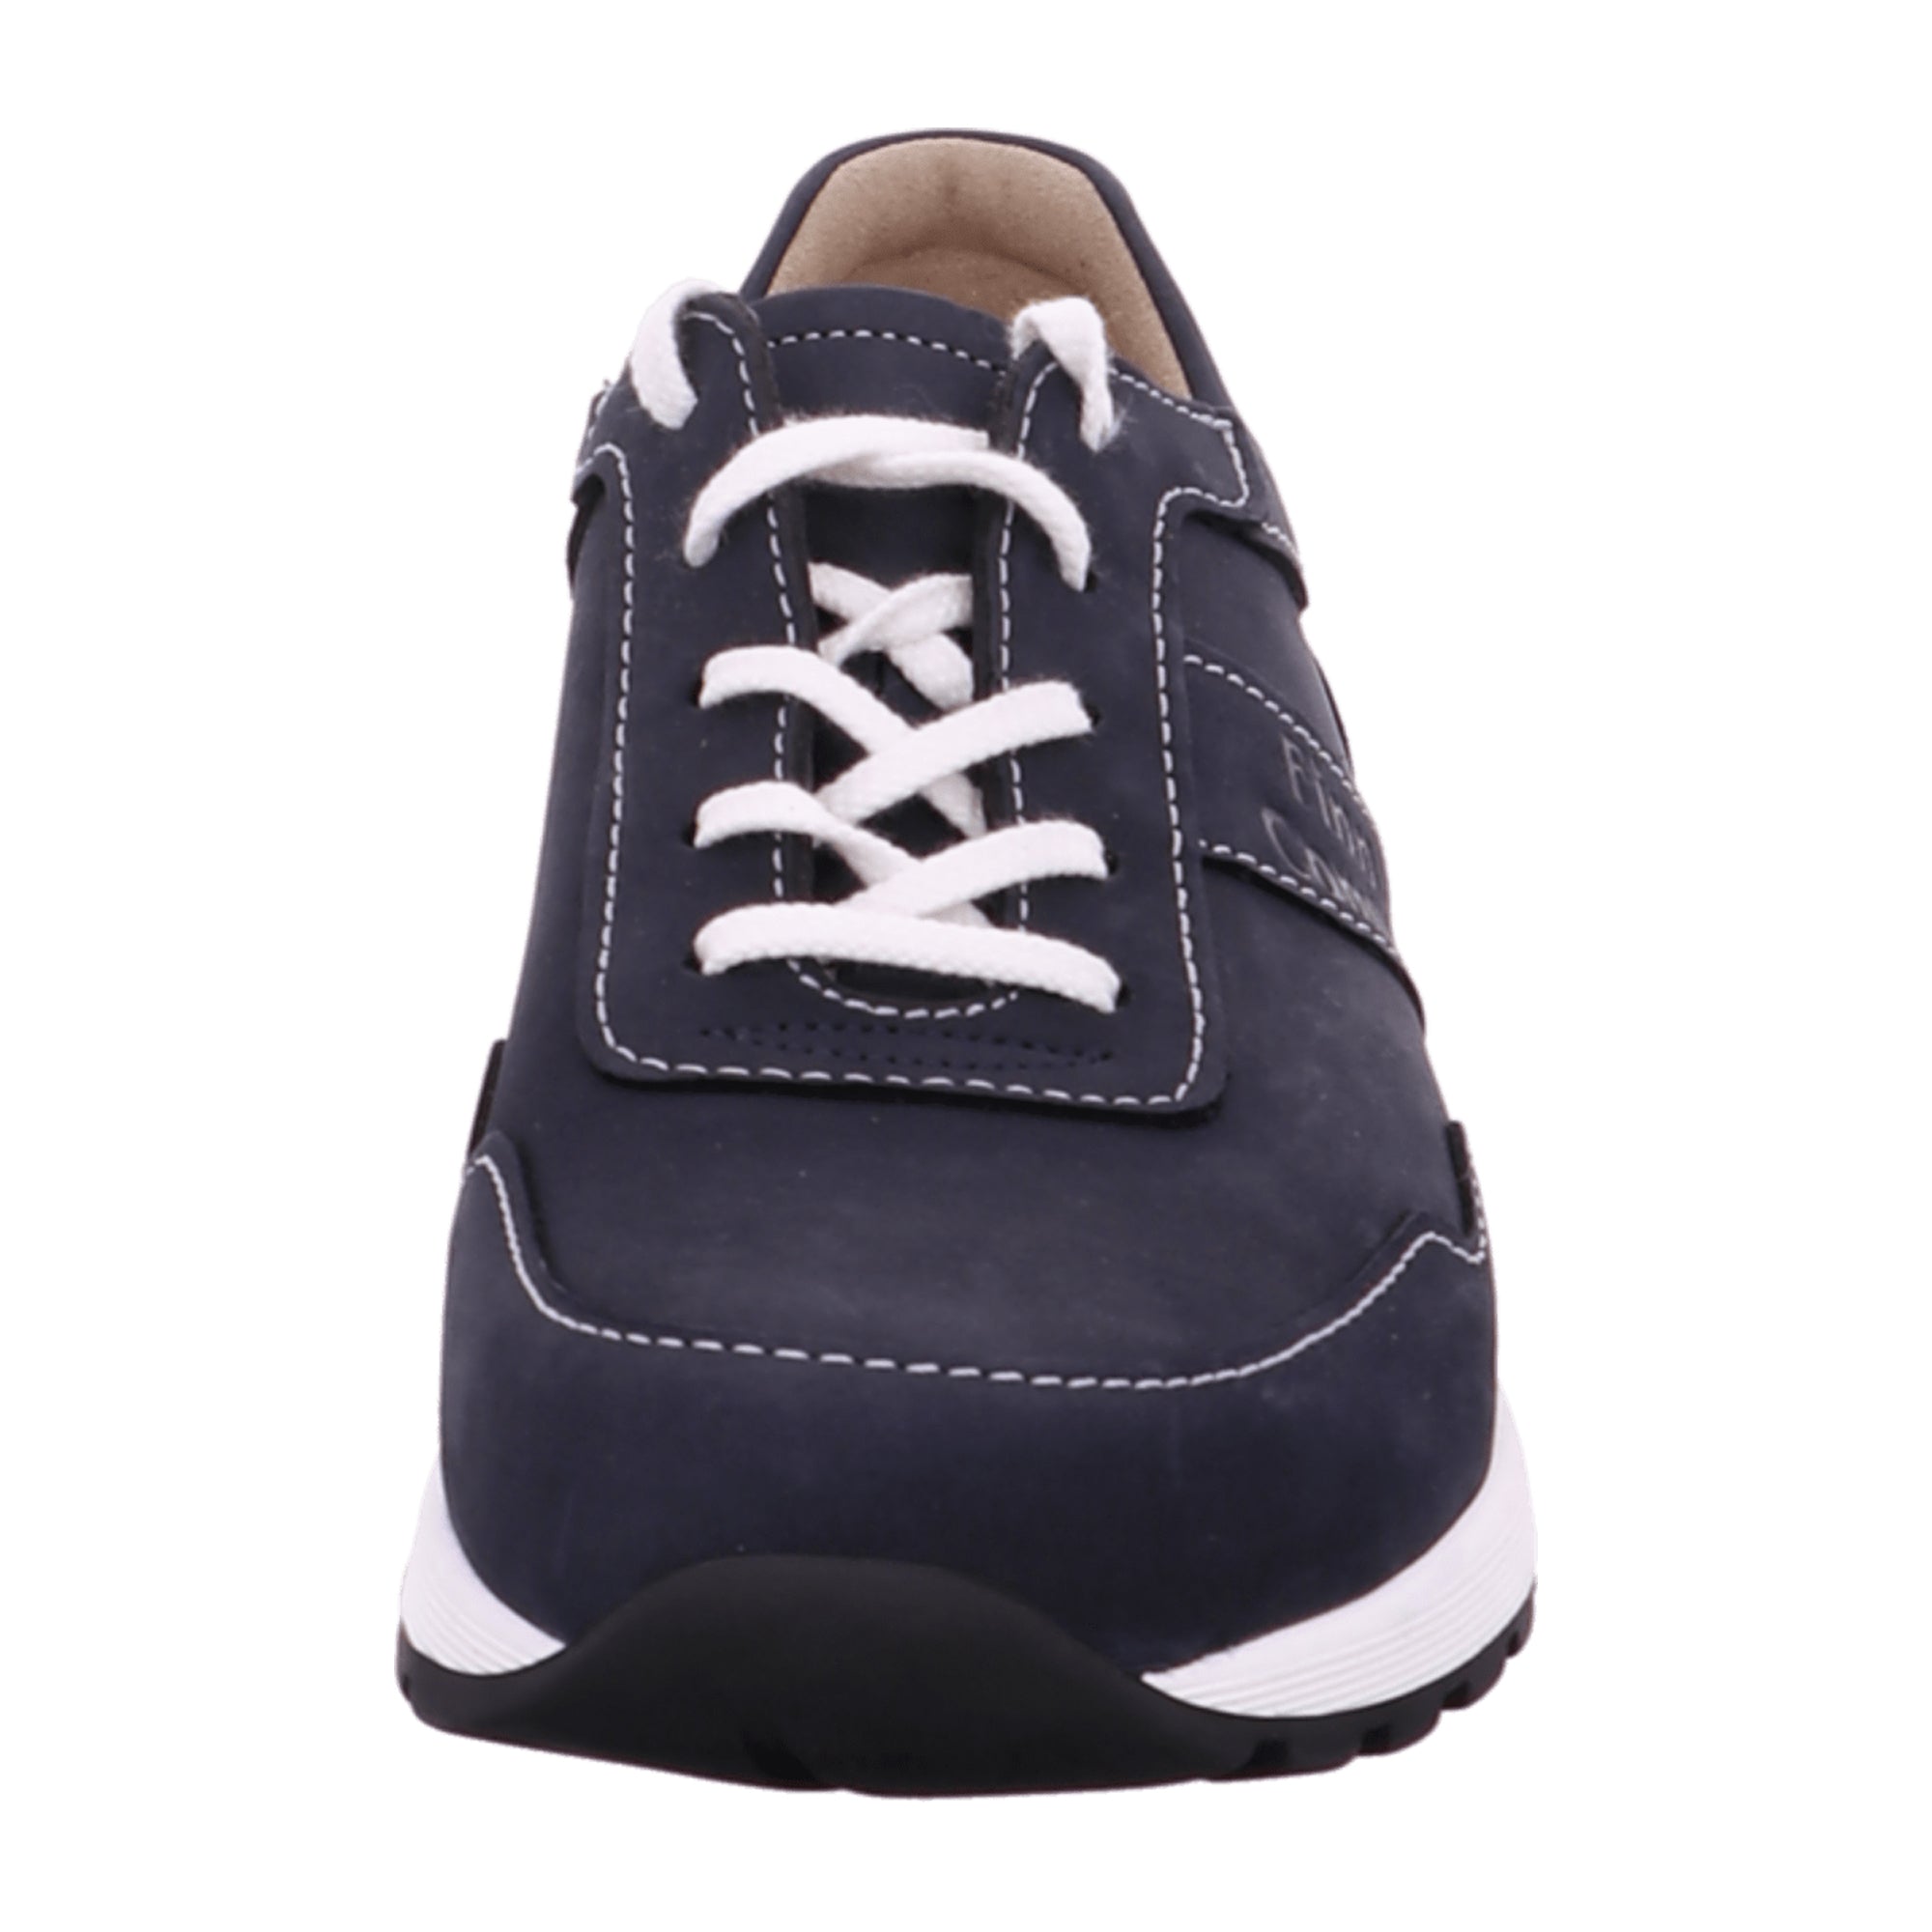 Finn Comfort Prezzo Marine Men's Stylish Blue Shoes - Durable Comfort Footwear